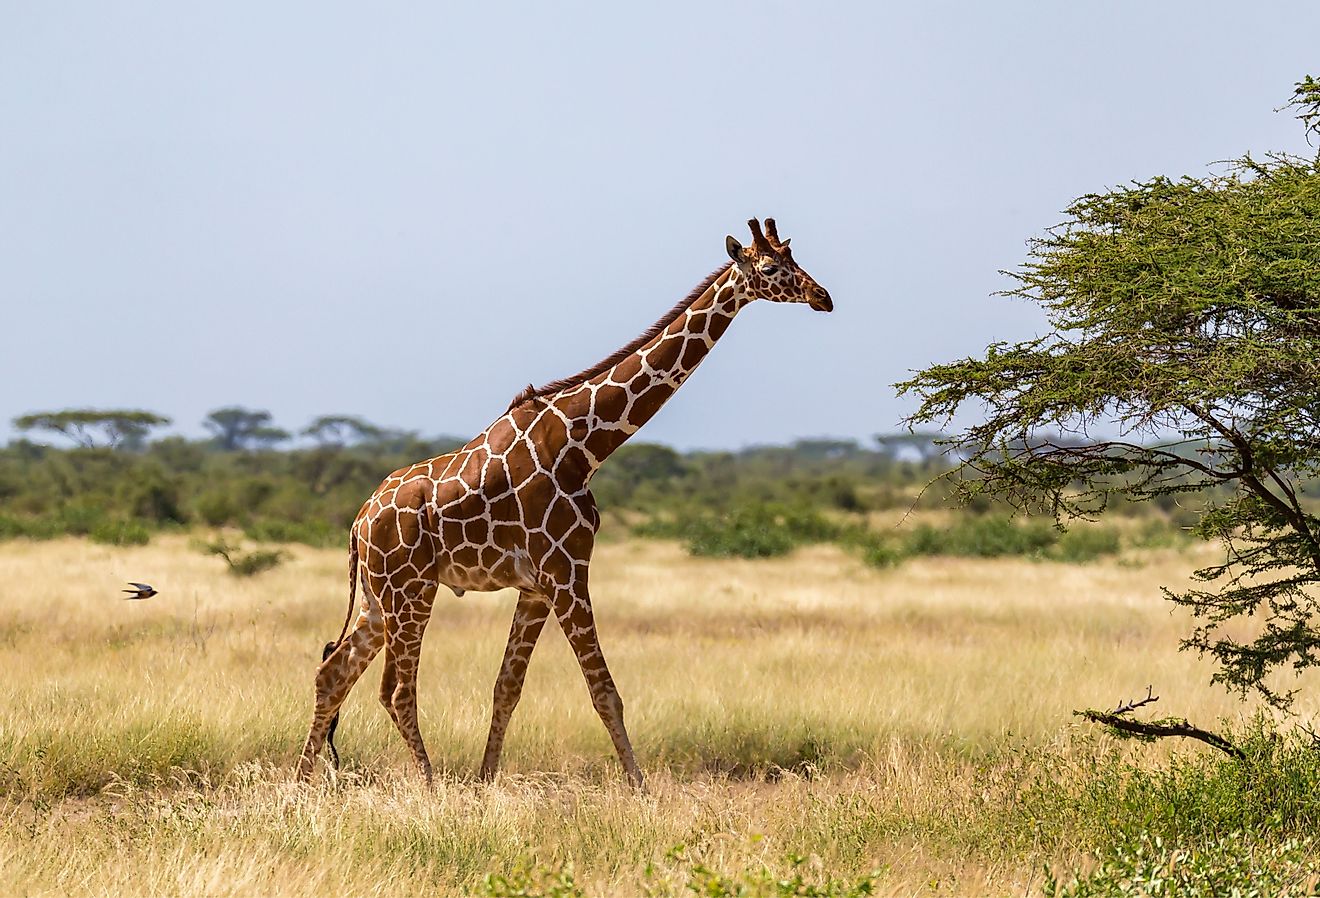 One giraffe walking through the savannah. Image credit Eugen Haag via Shutterstock.